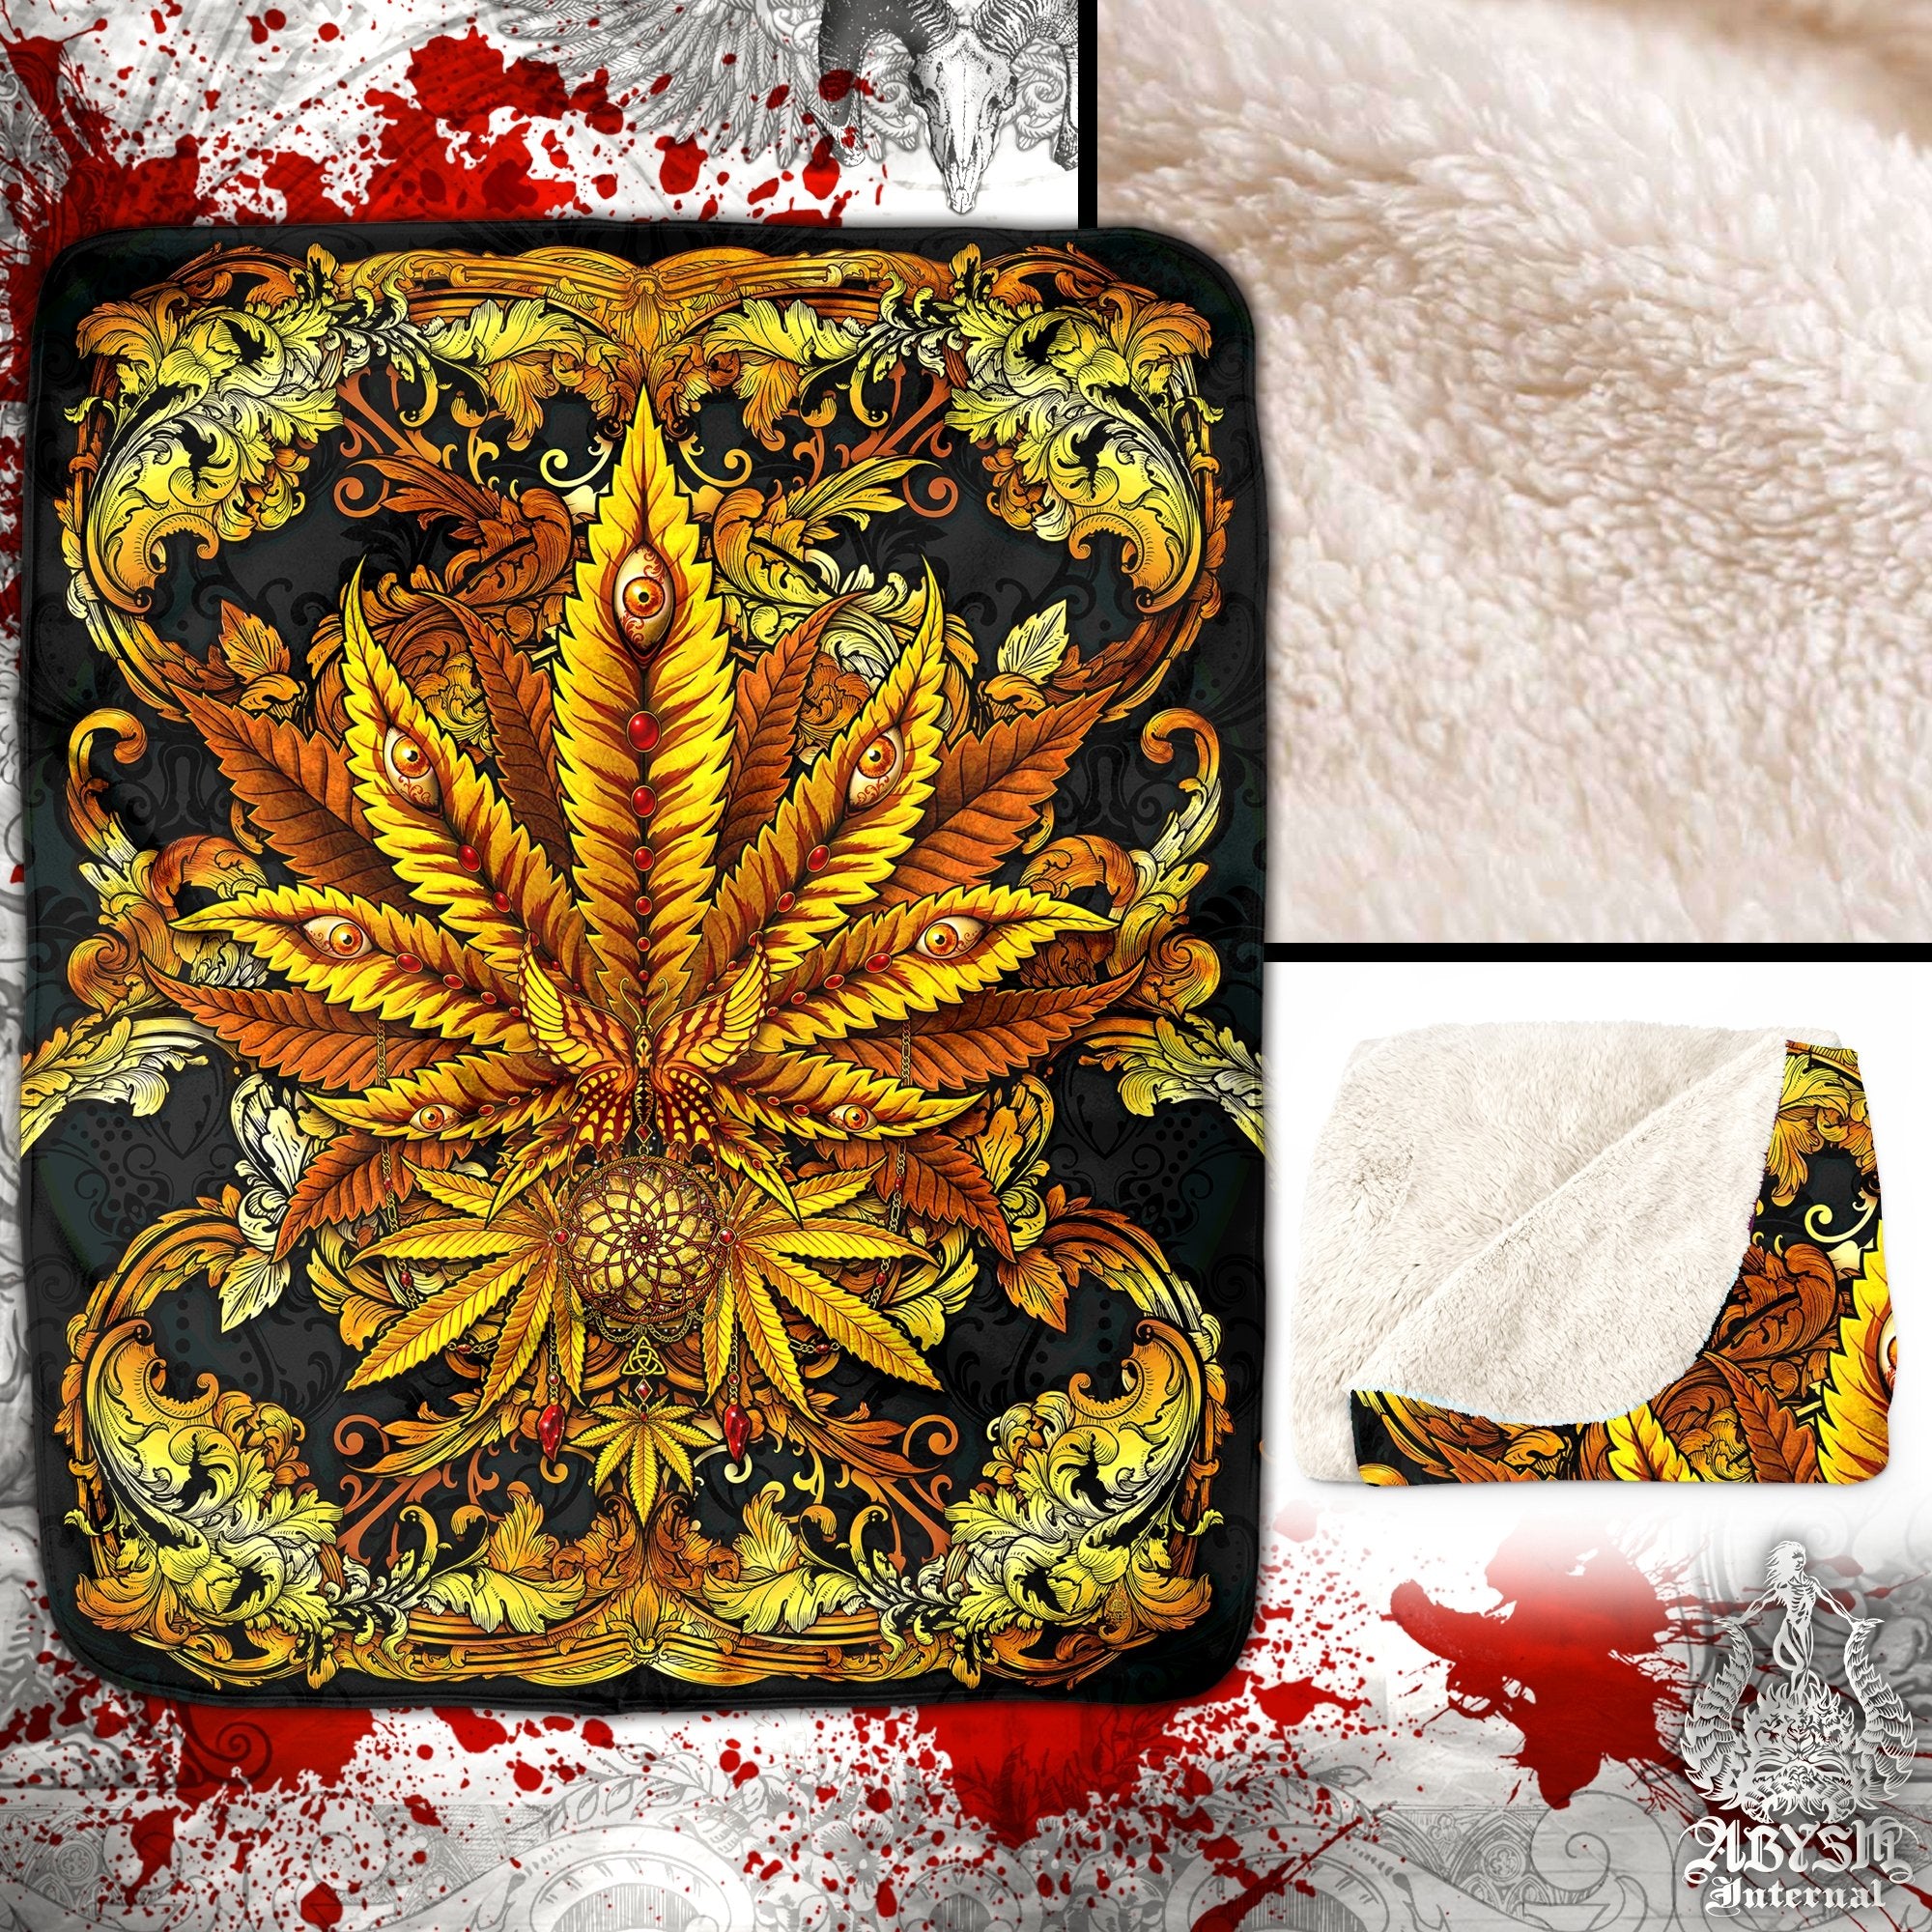 Weed Throw Fleece Blanket, Cannabis Art, Indie and Hippie Home Decor, 420 Gift - Marijuana, Gold - Abysm Internal